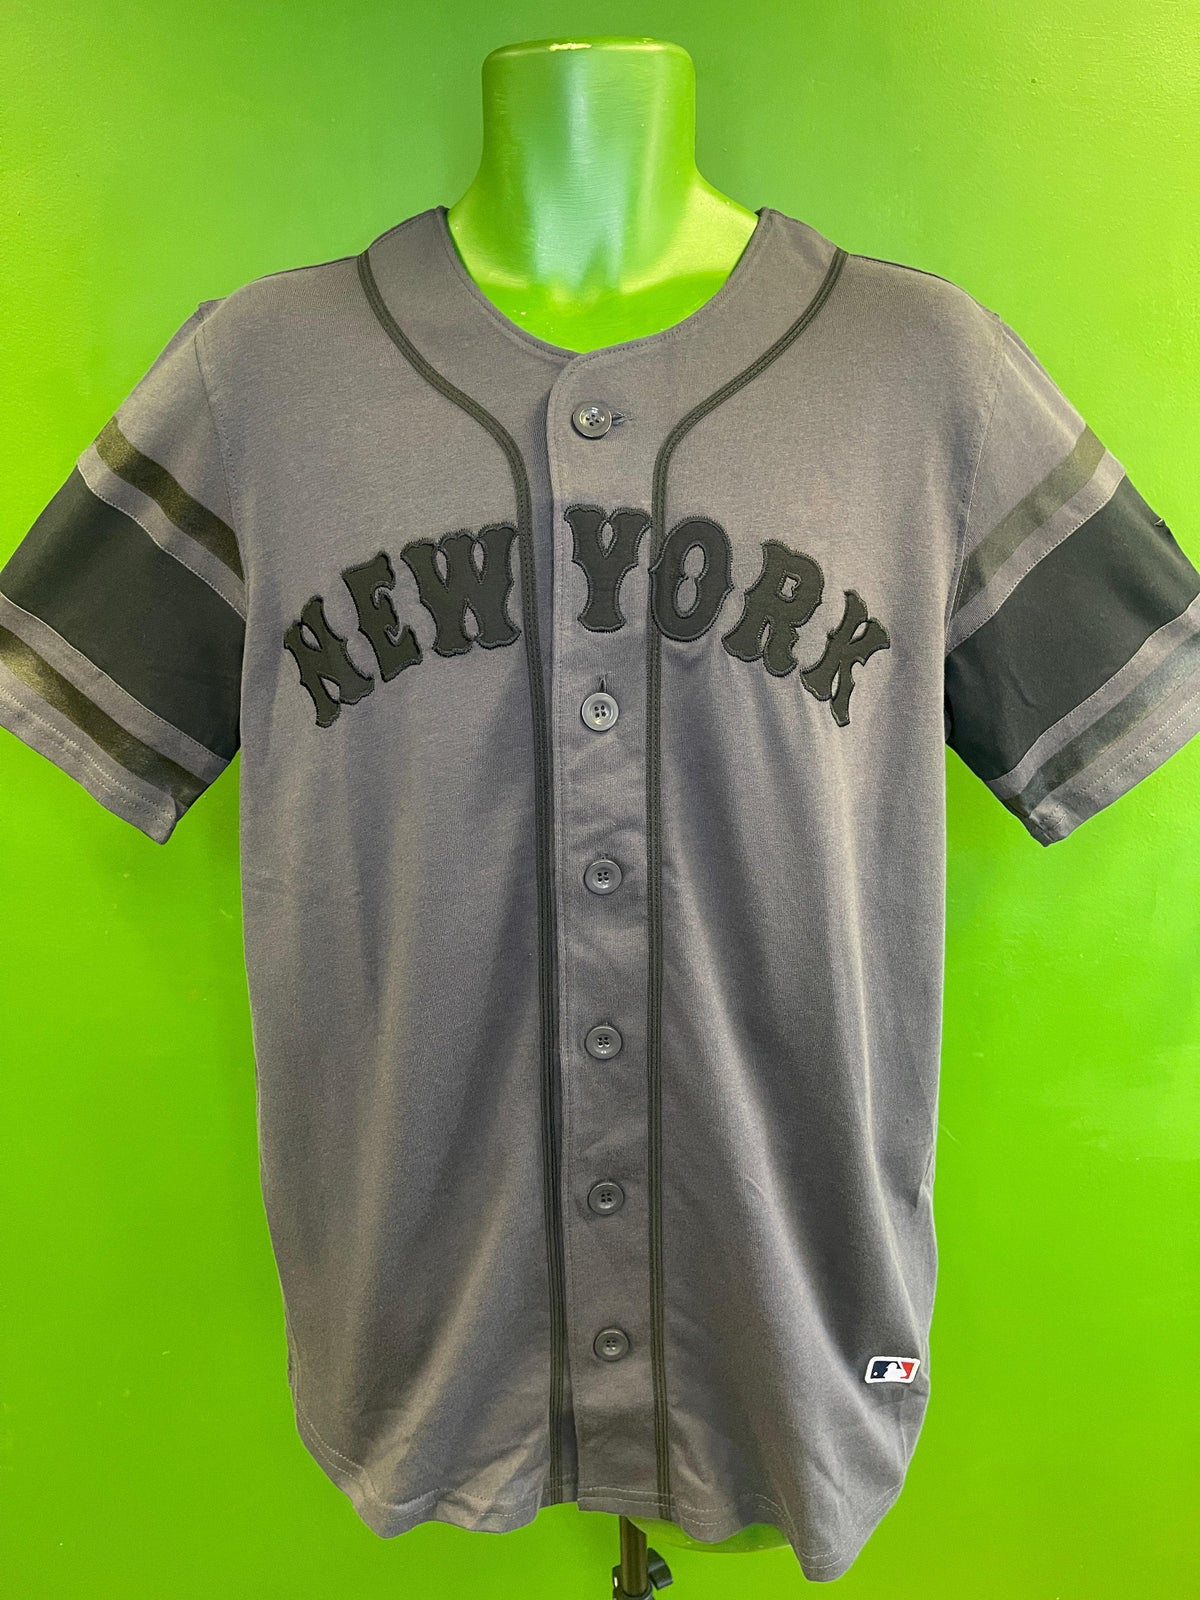 MLB New York Yankees 100% Cotton Monochrome Team Jersey Men's Medium NWT